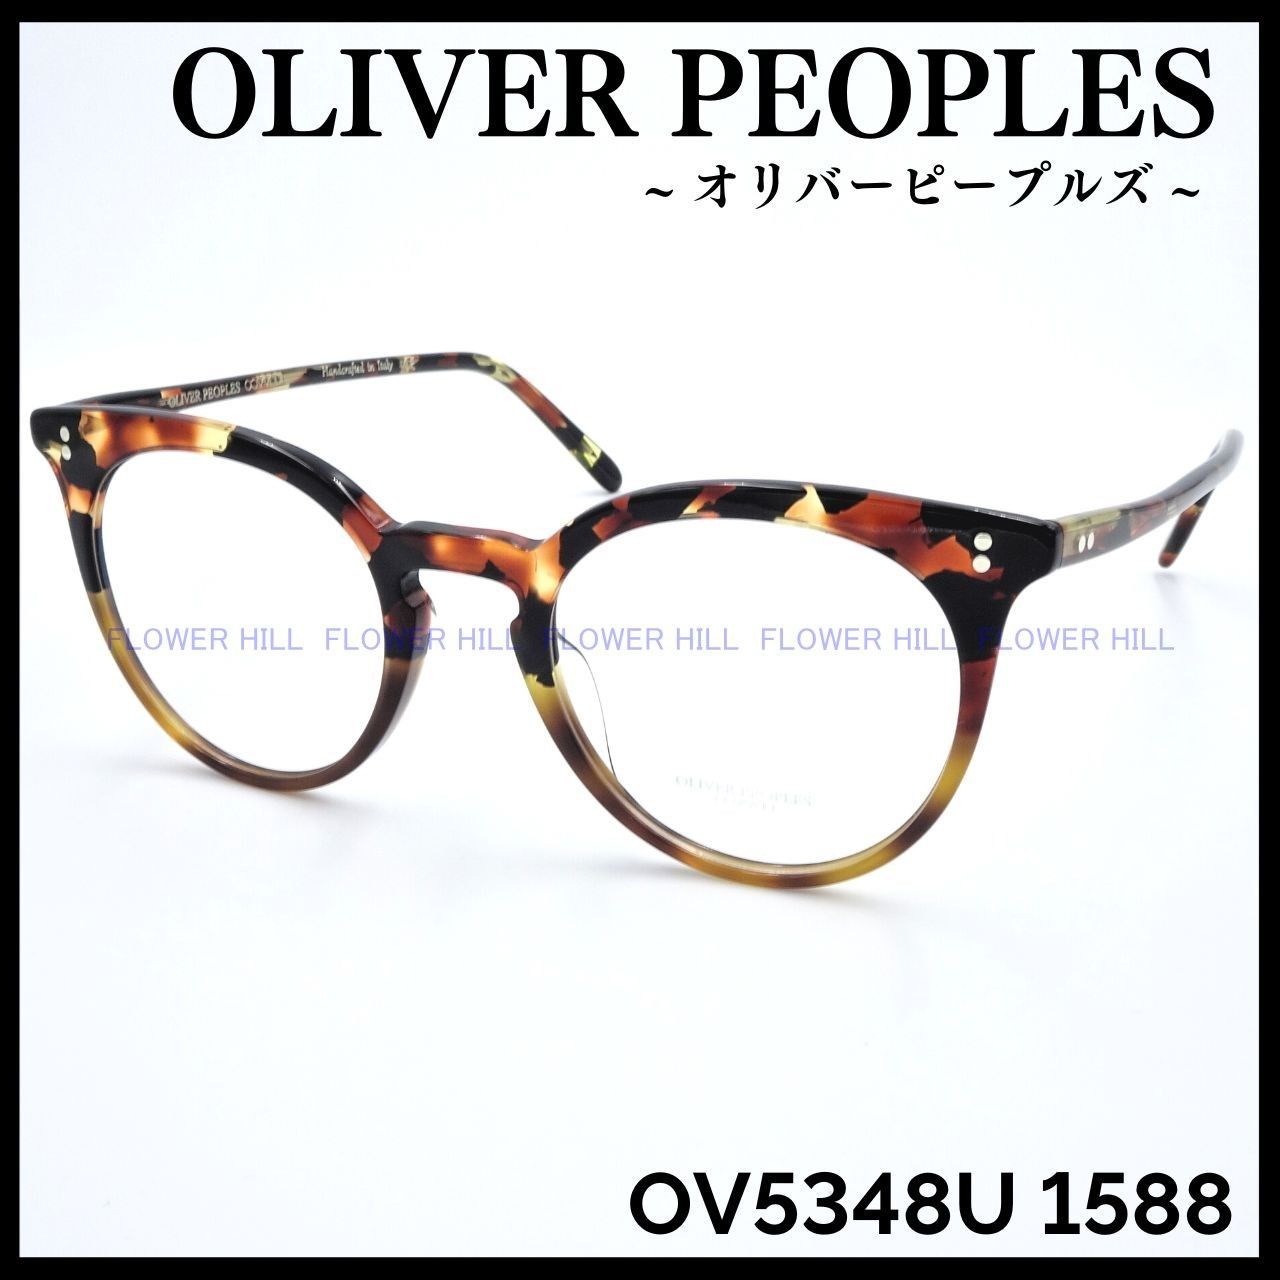 OLIVER PEOPLES オリバーピープルズ メガネ フレーム OV5348U 1588